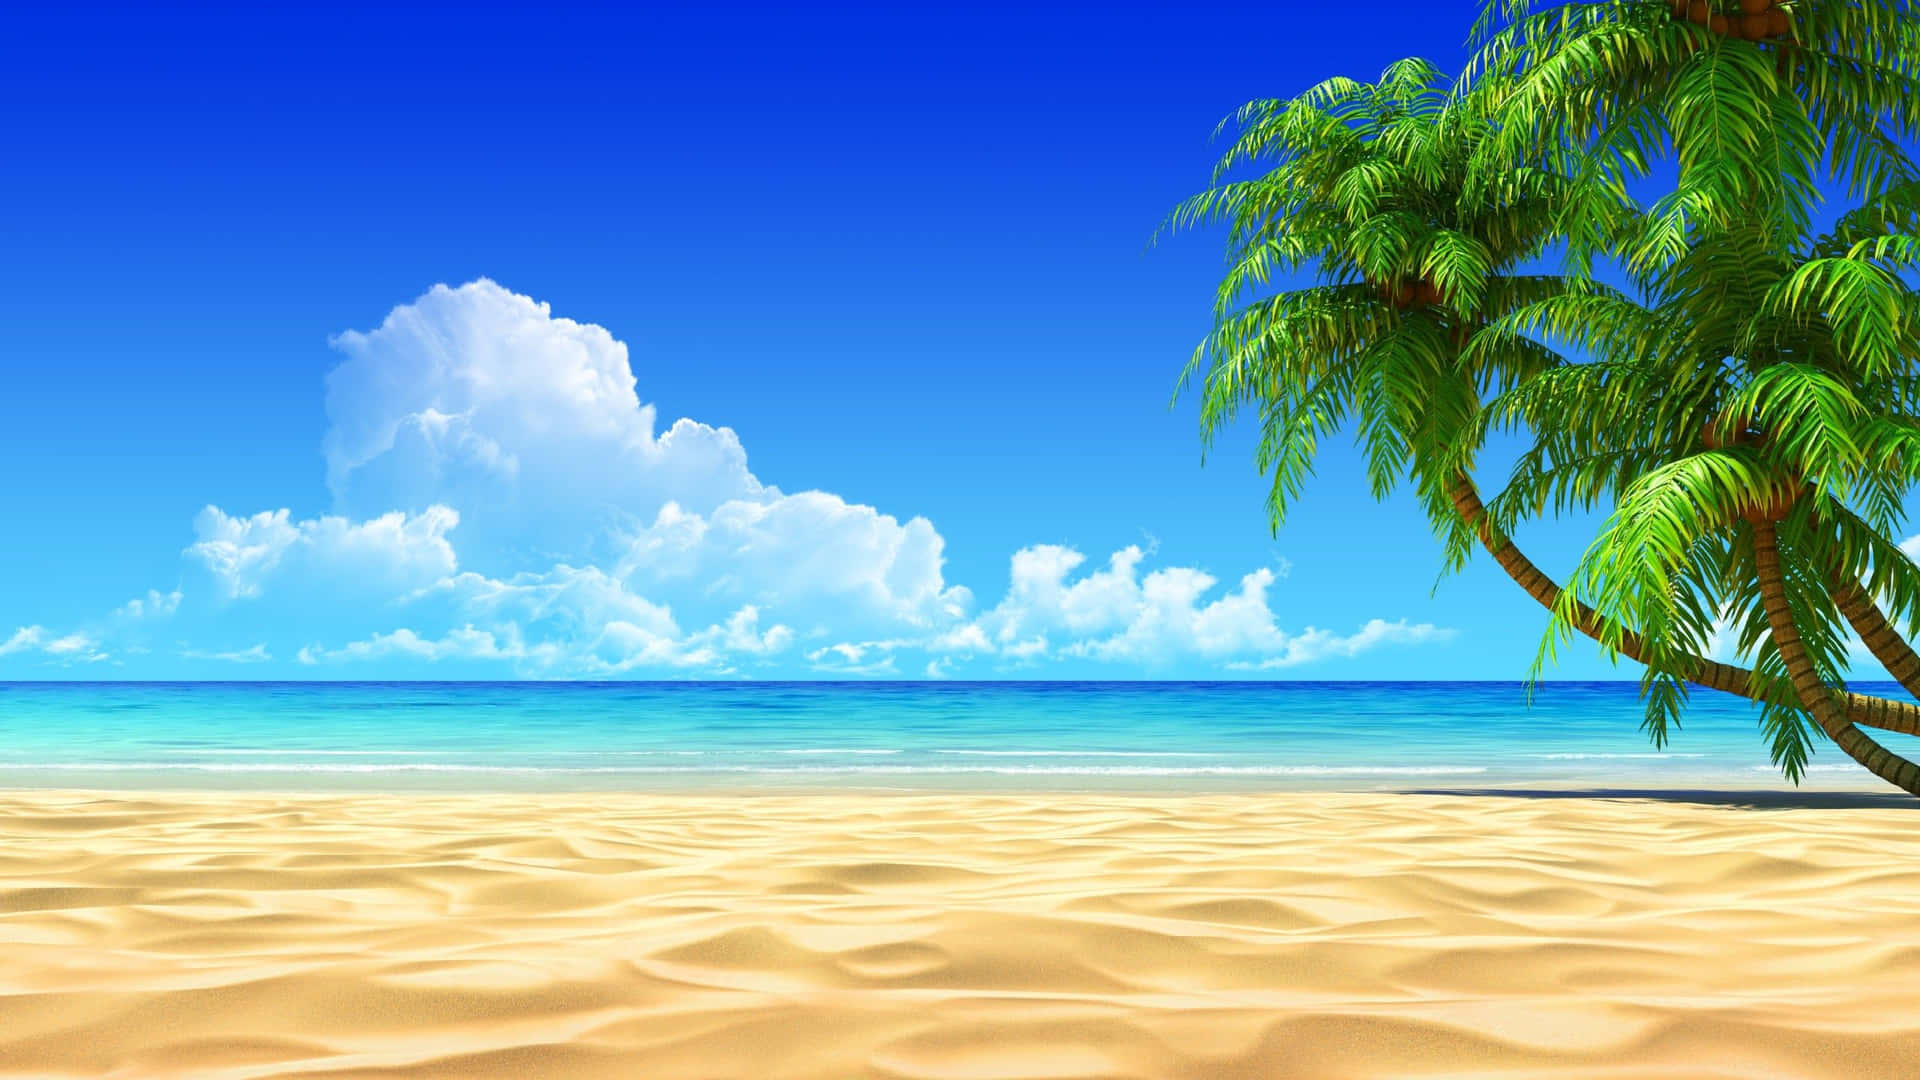 Nyd en solskinsdag på stranden! Wallpaper